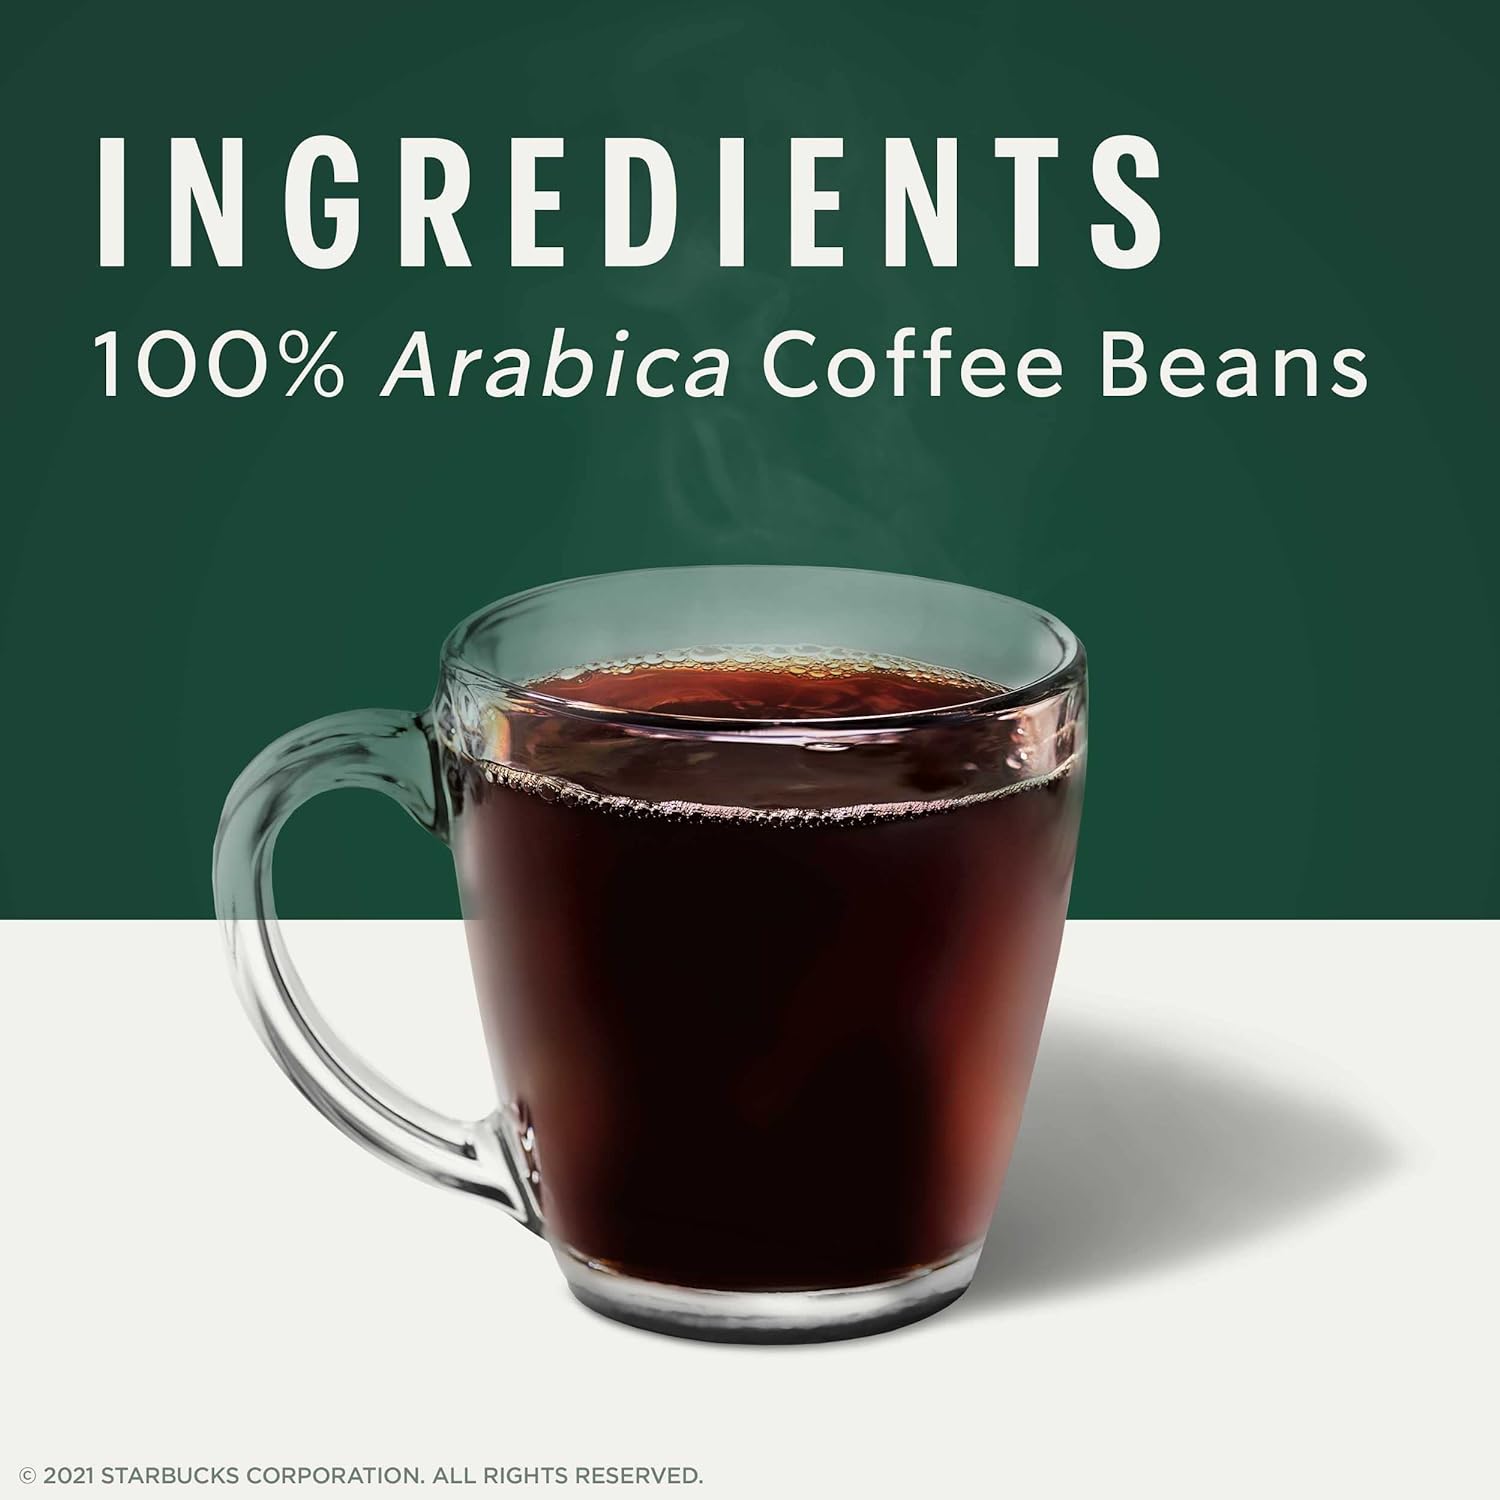 Starbucks K-Cup Coffee Pods, Starbucks Blonde Roast Coffee, Veranda Blend for Keurig Brewers, 100% Arabica, 6 boxes (60 pods total) : Everything Else